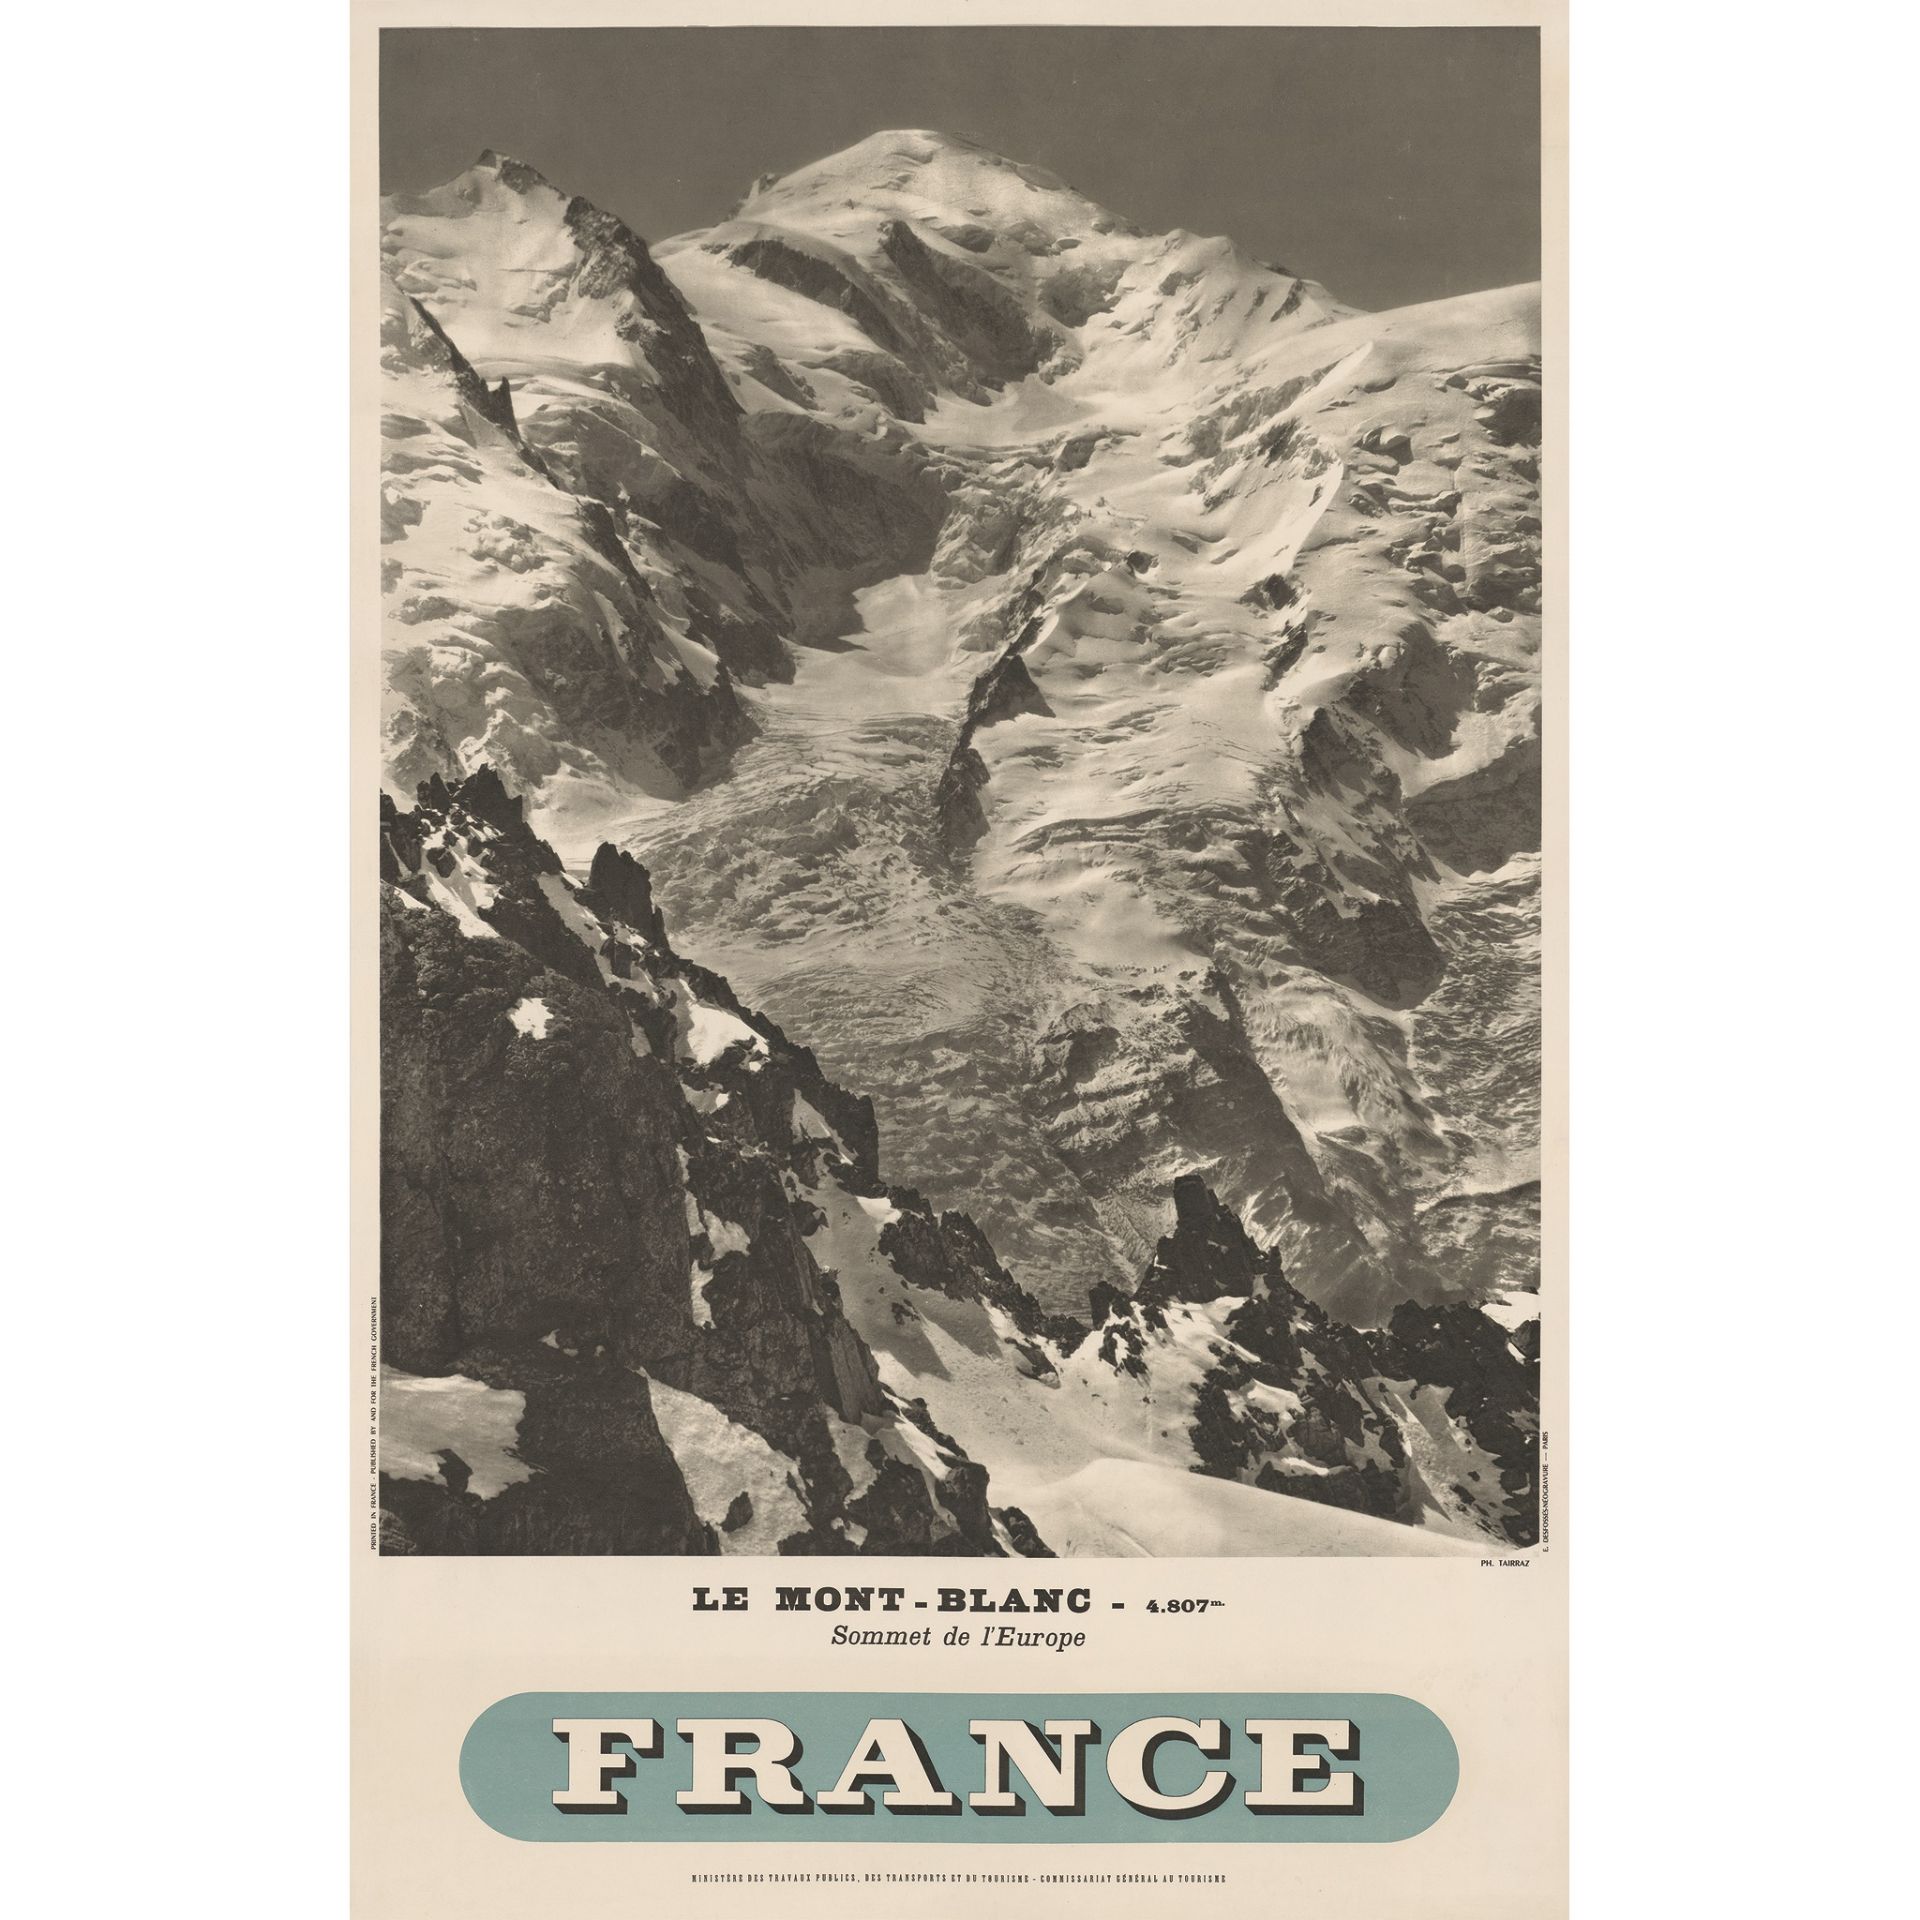 Tairraz (Photo) Le Mont Blanc